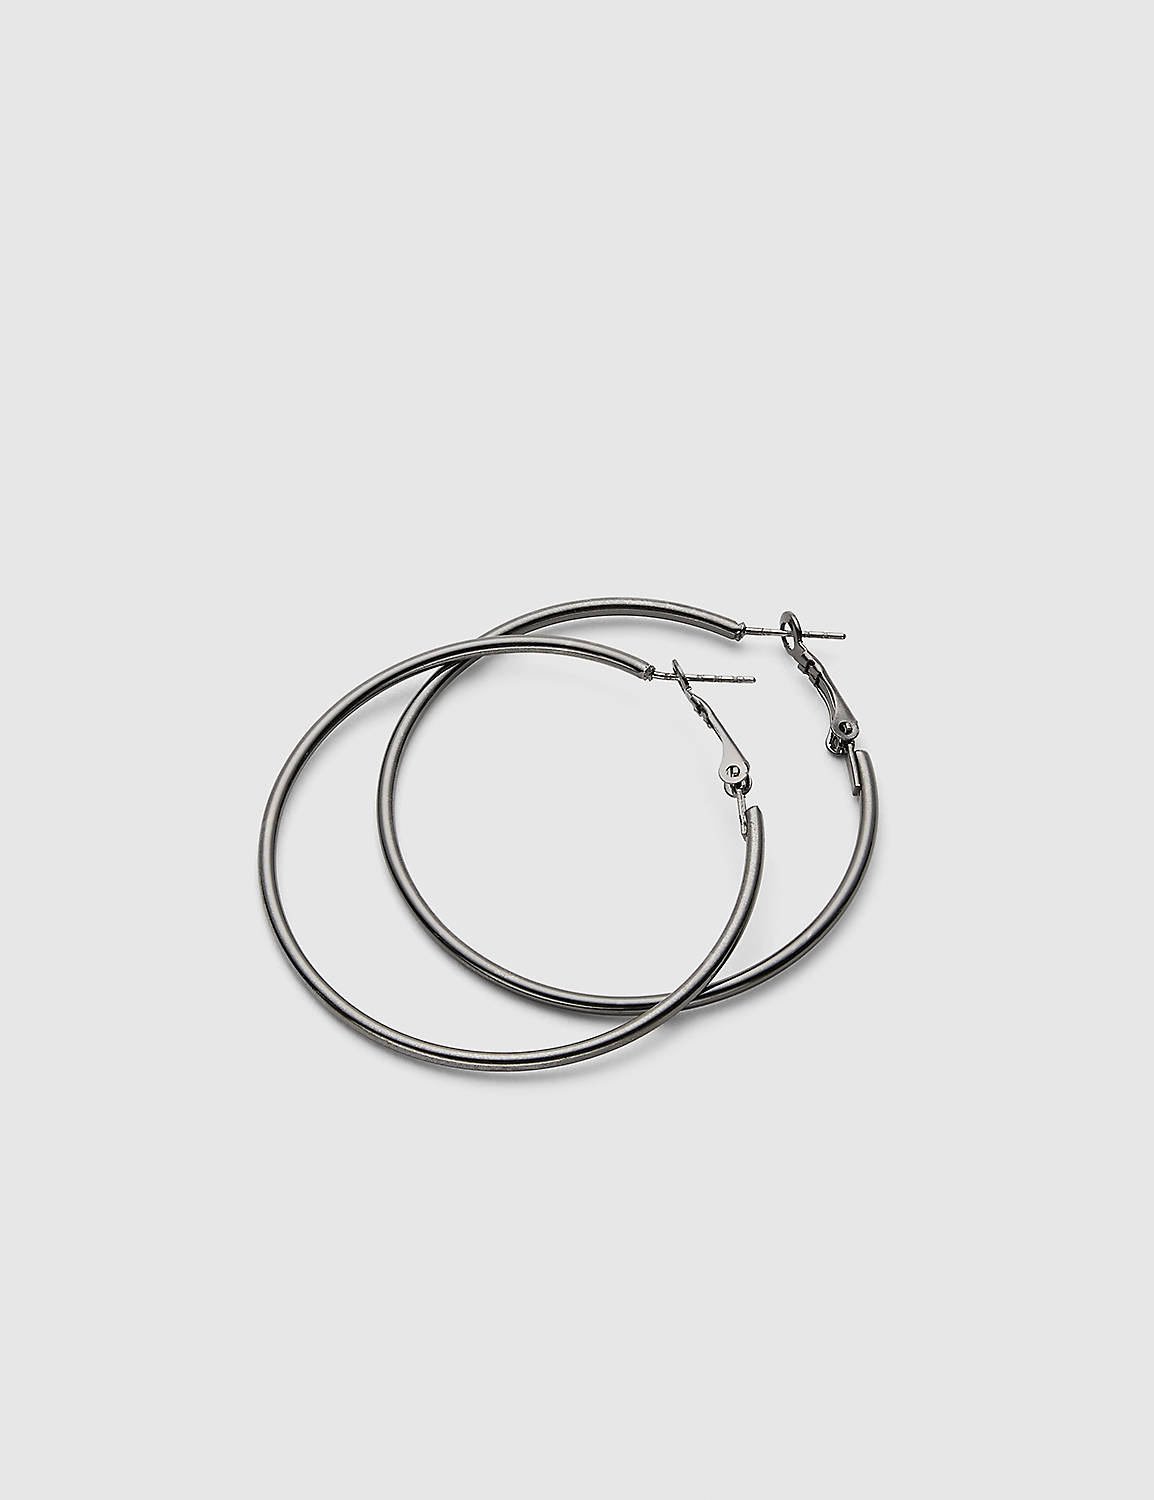 Large Hoop Earrings H:Hematite LB 2498:ONESZ Product Image 1